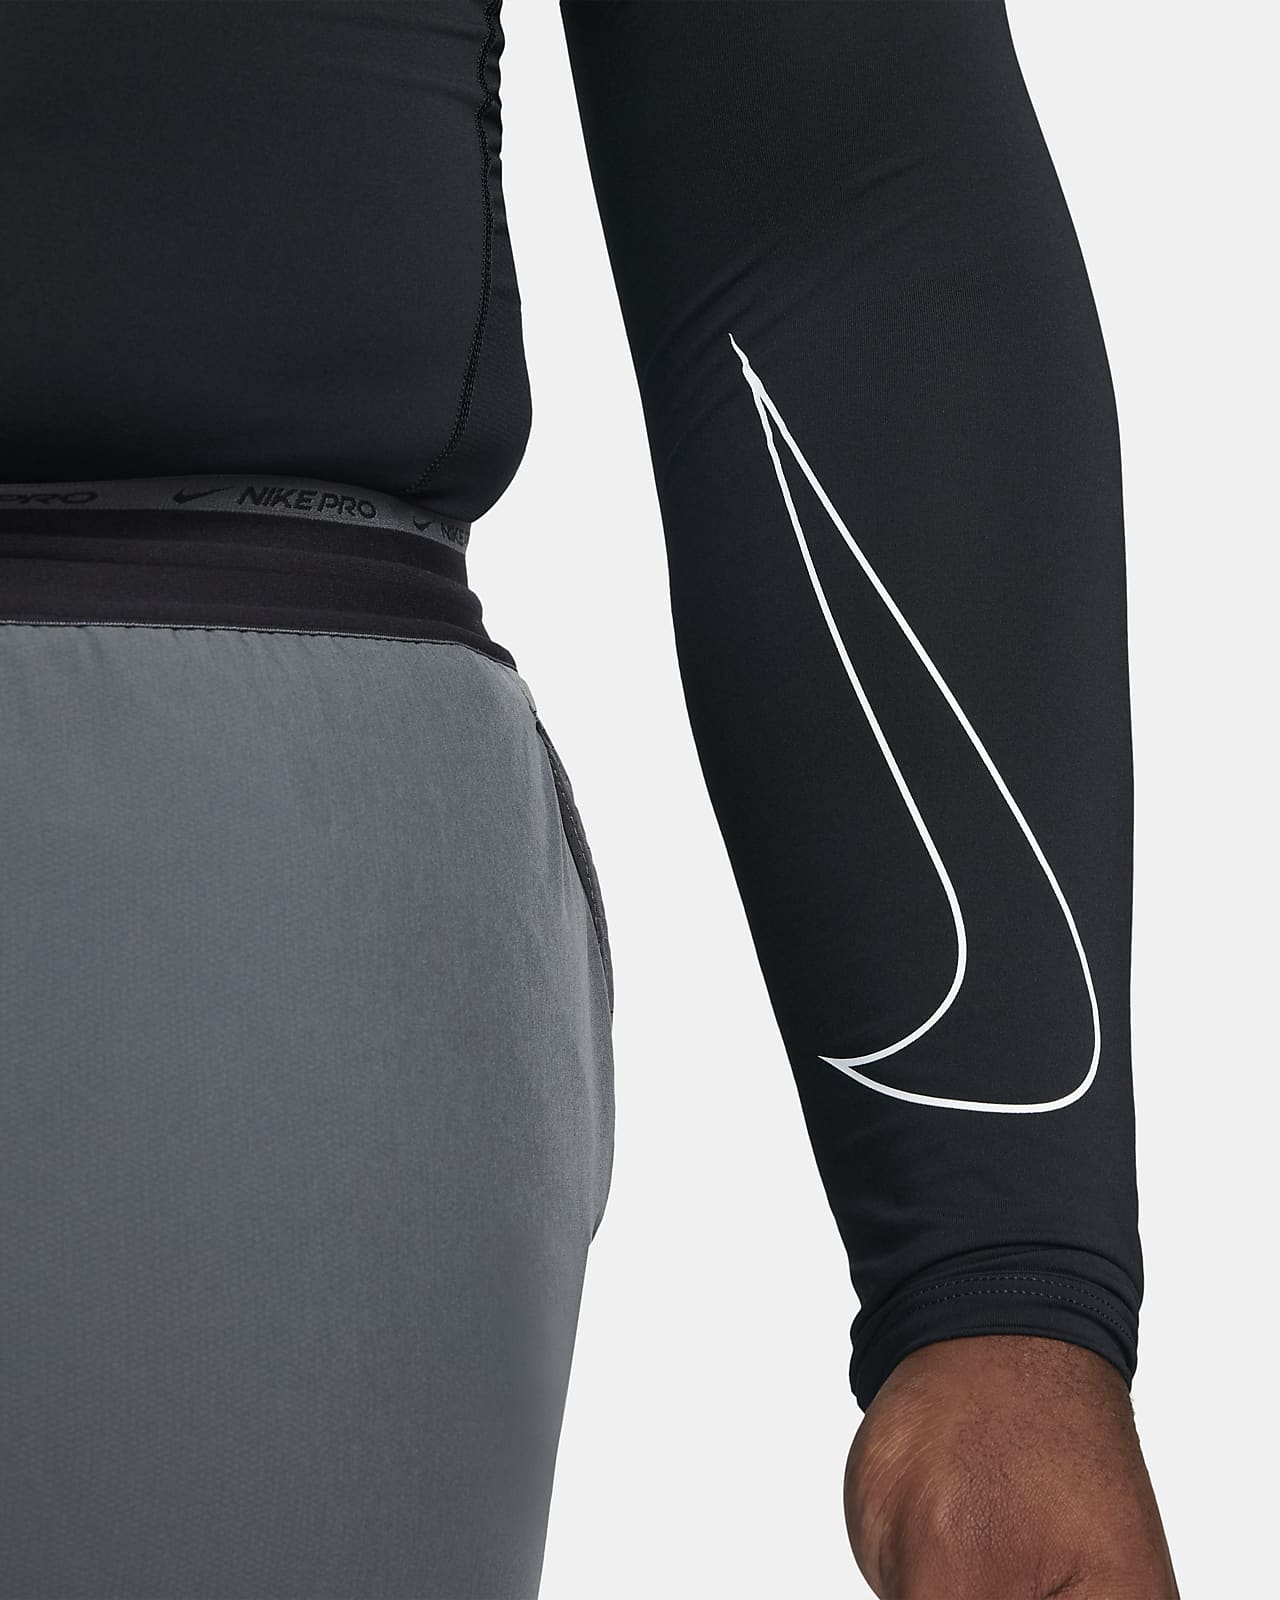 Nike Pro Men's Fit Long-Sleeve Top. Nike.com